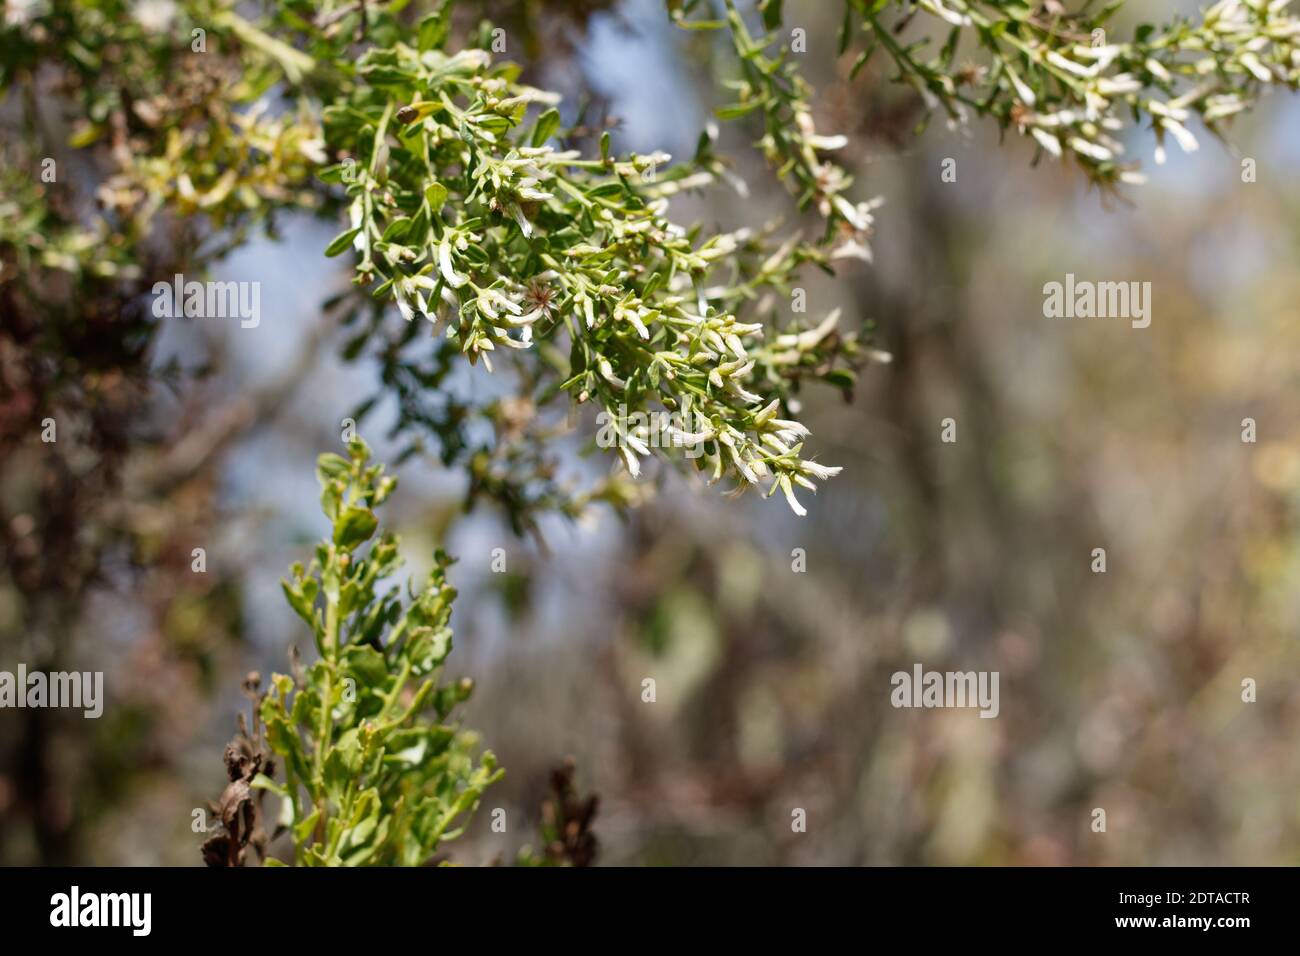 White pistillate bloom, Coyote Bush, Baccharis Pilularis, Asteraceae, native shrub, Ballona Freshwater Marsh, Southern California Coast, Autumn. Stock Photo